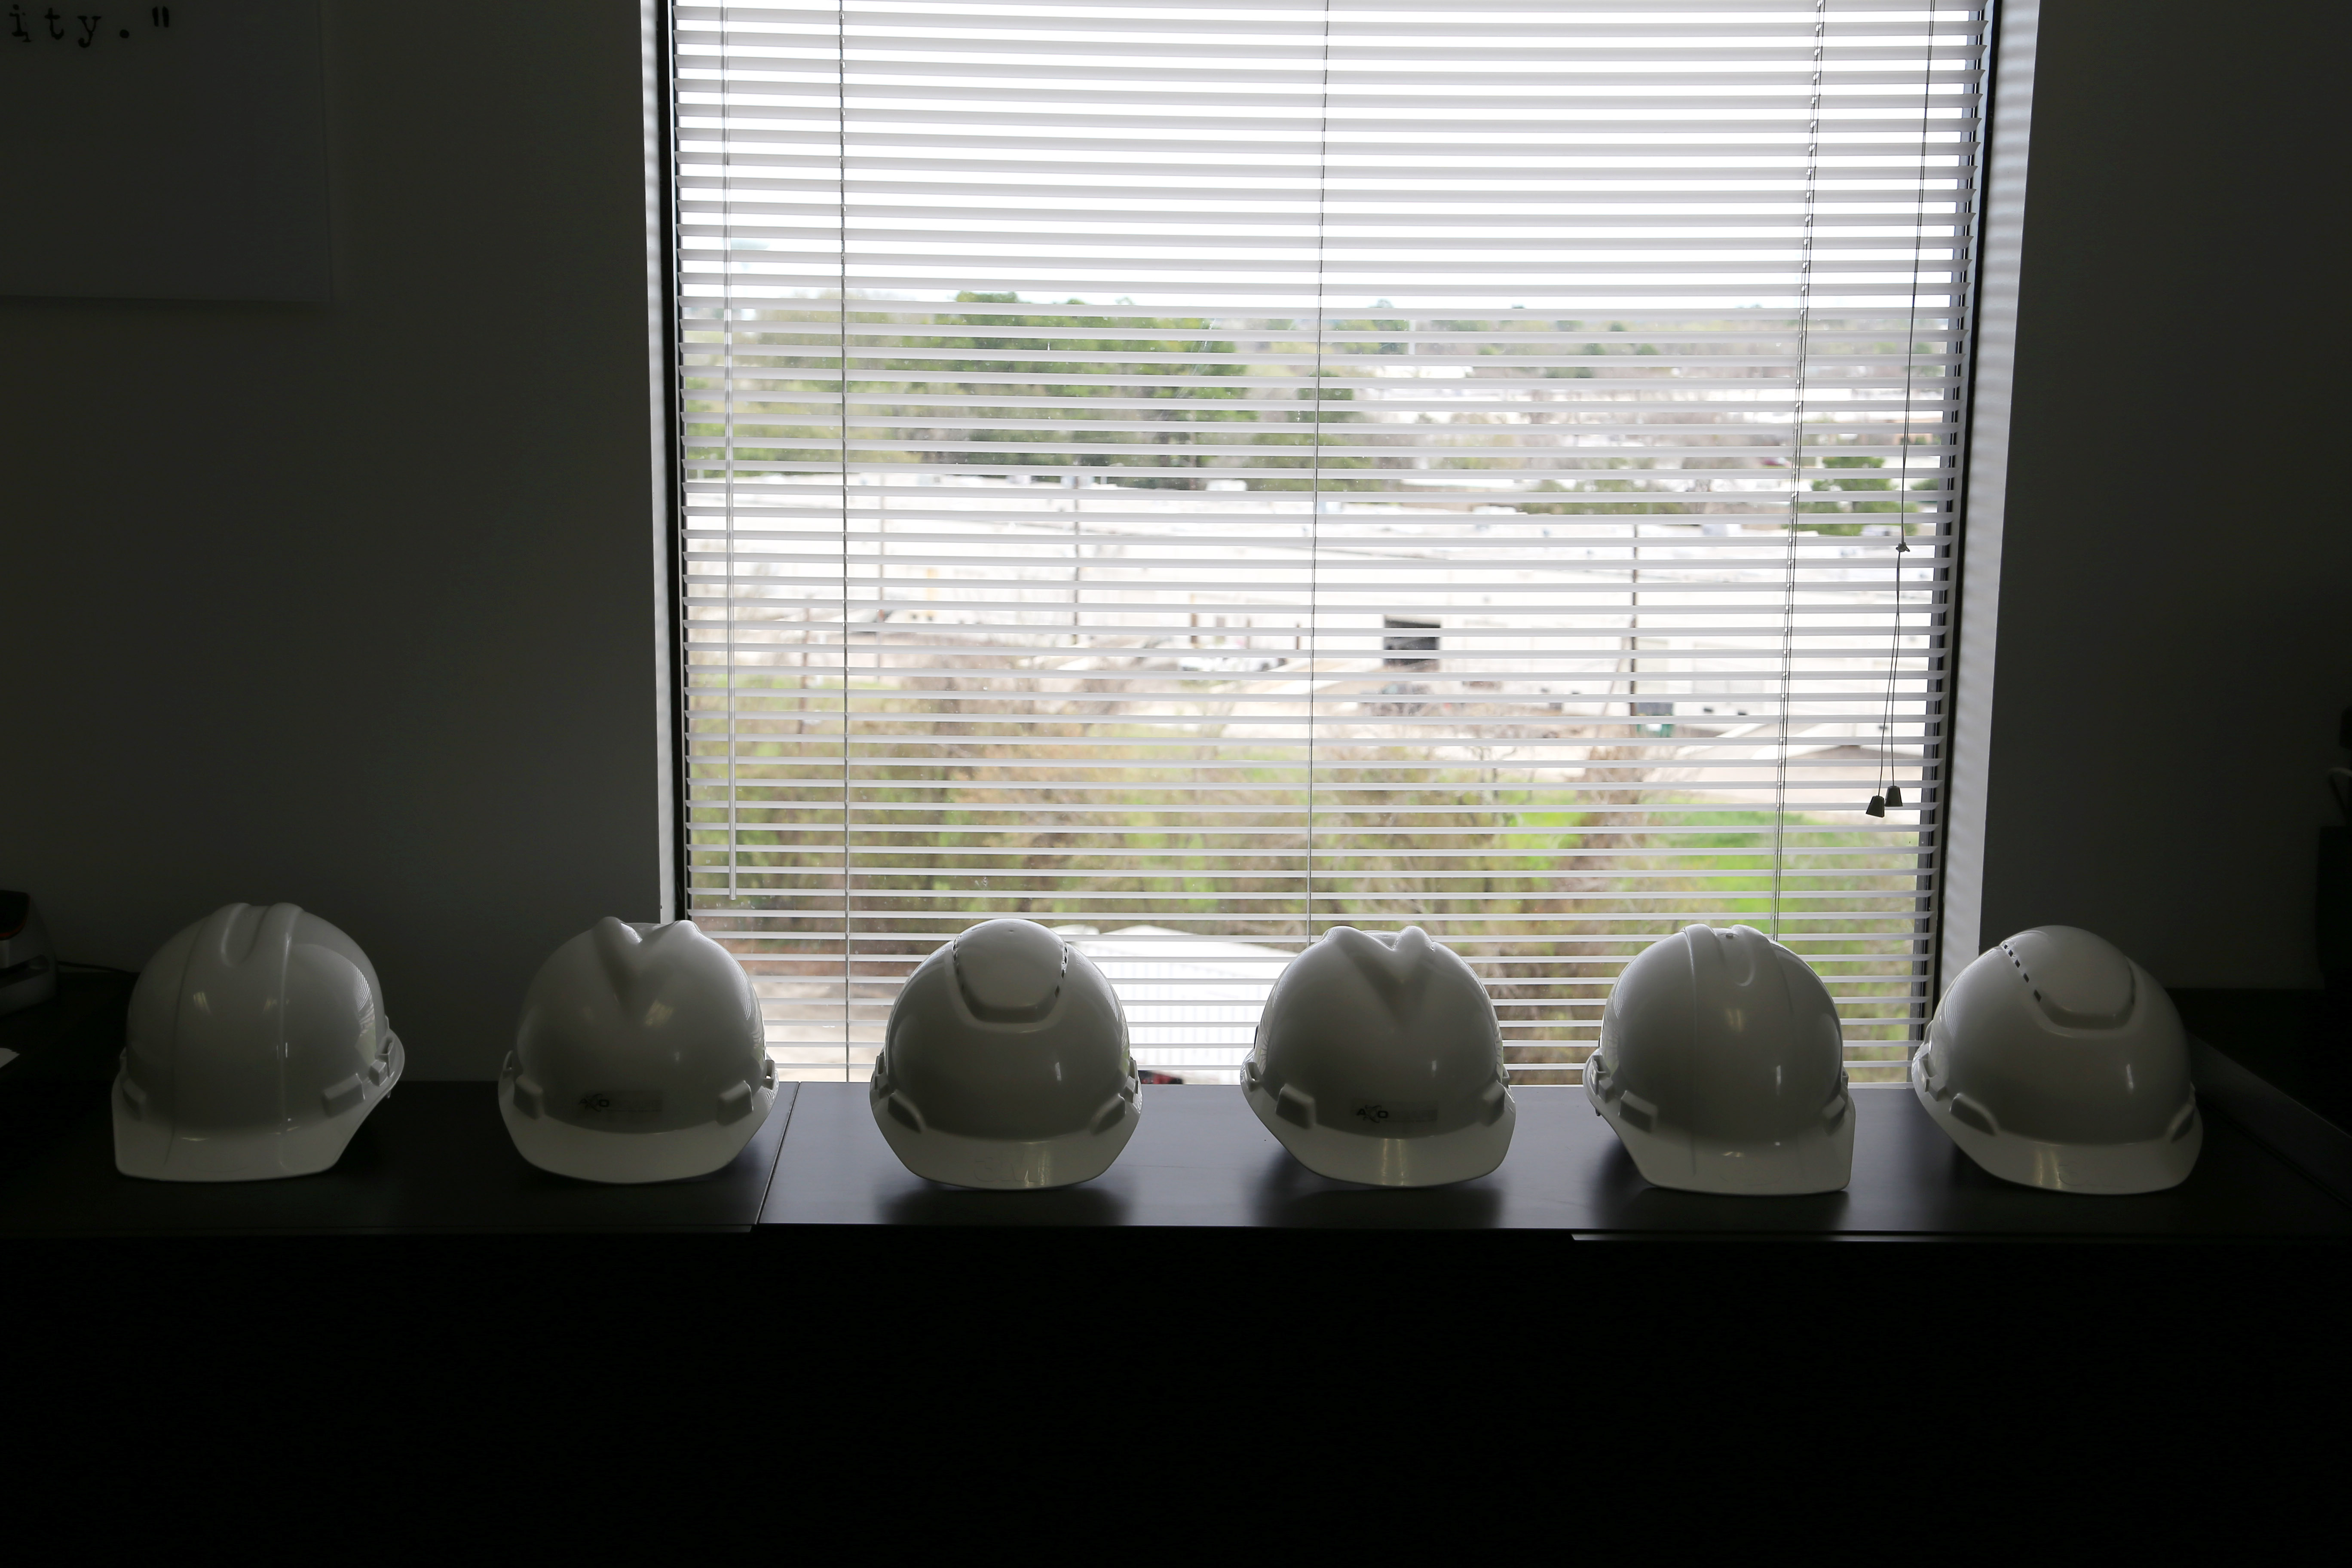 Construction hats